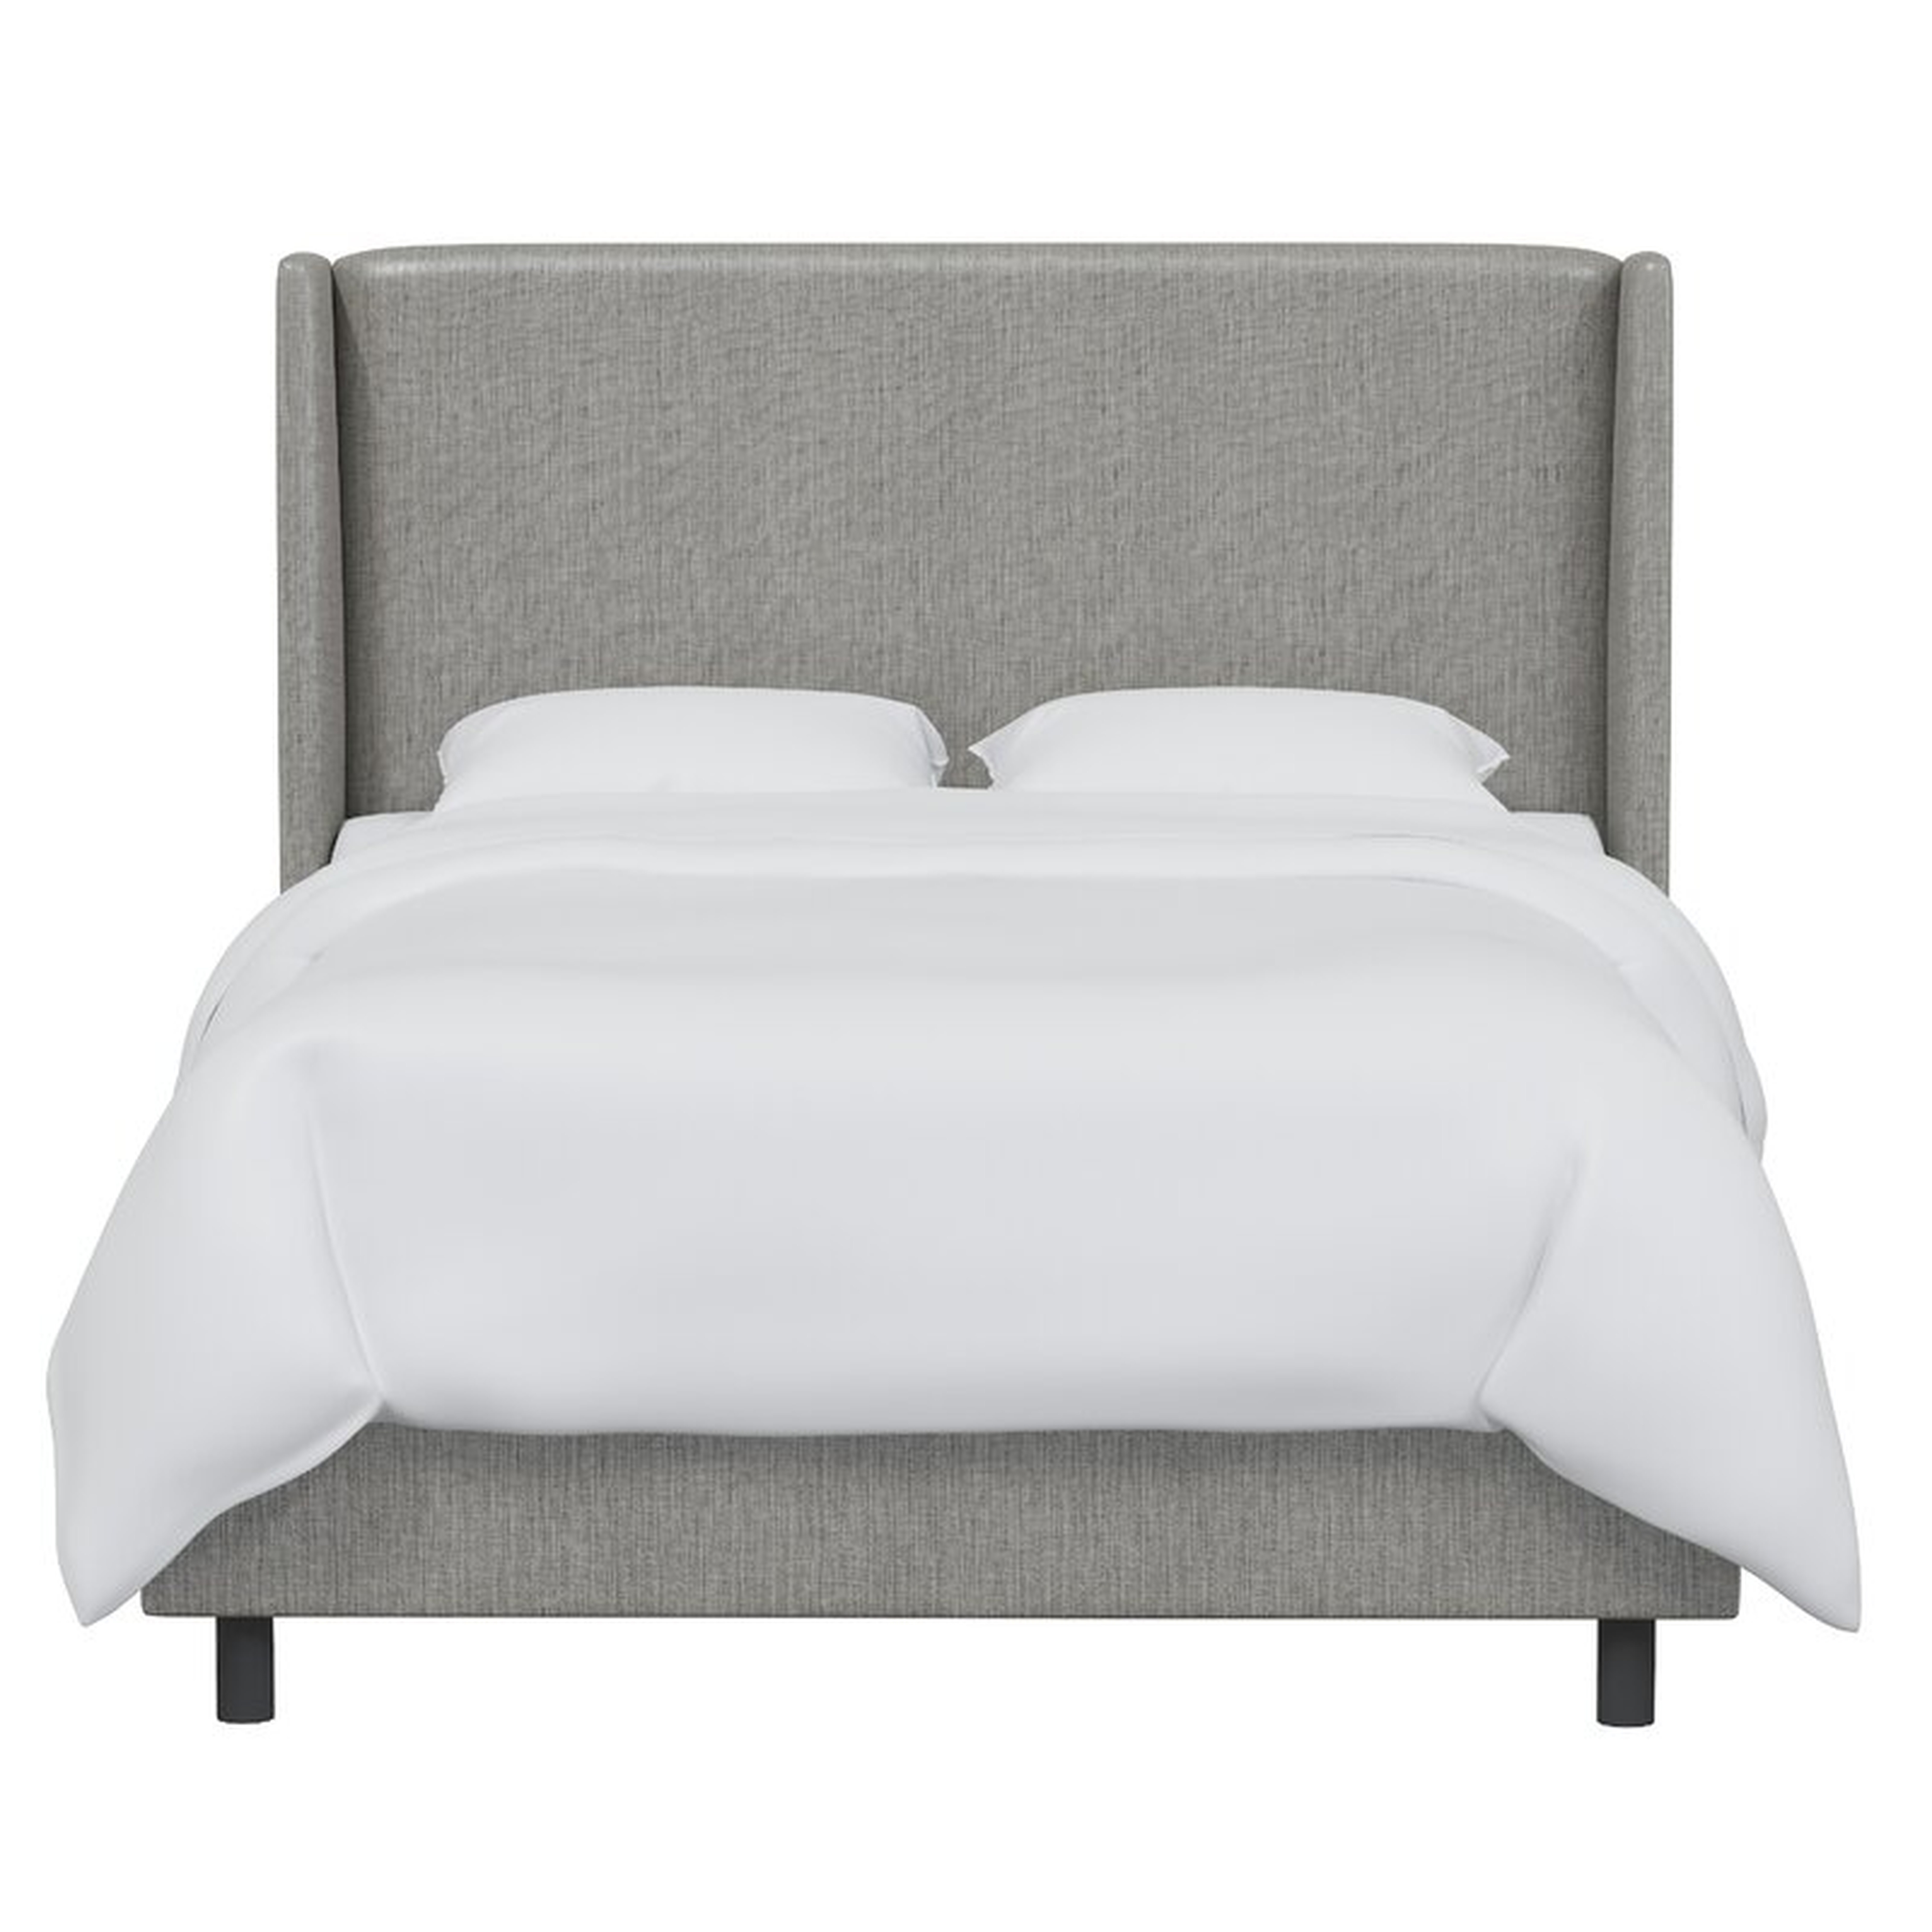 Goodrich Upholstered Standard Bed - Wayfair